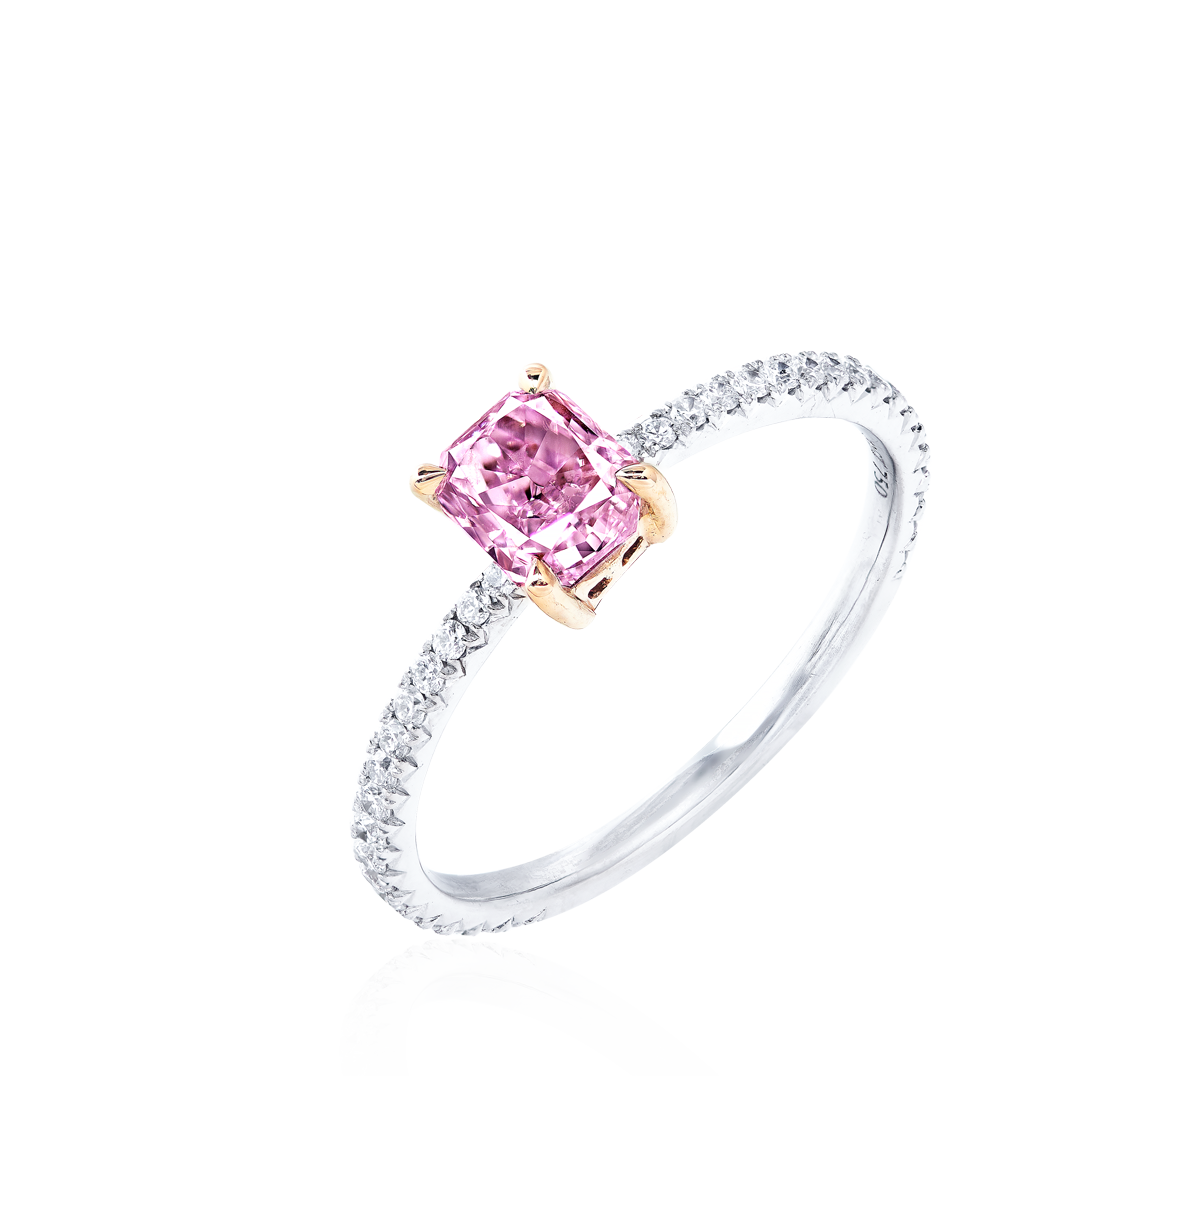 GIA 0.83克拉 ALROSA 紫鑽鑽戒
Fancy Purple Colored Diamond 
and Diamond ring